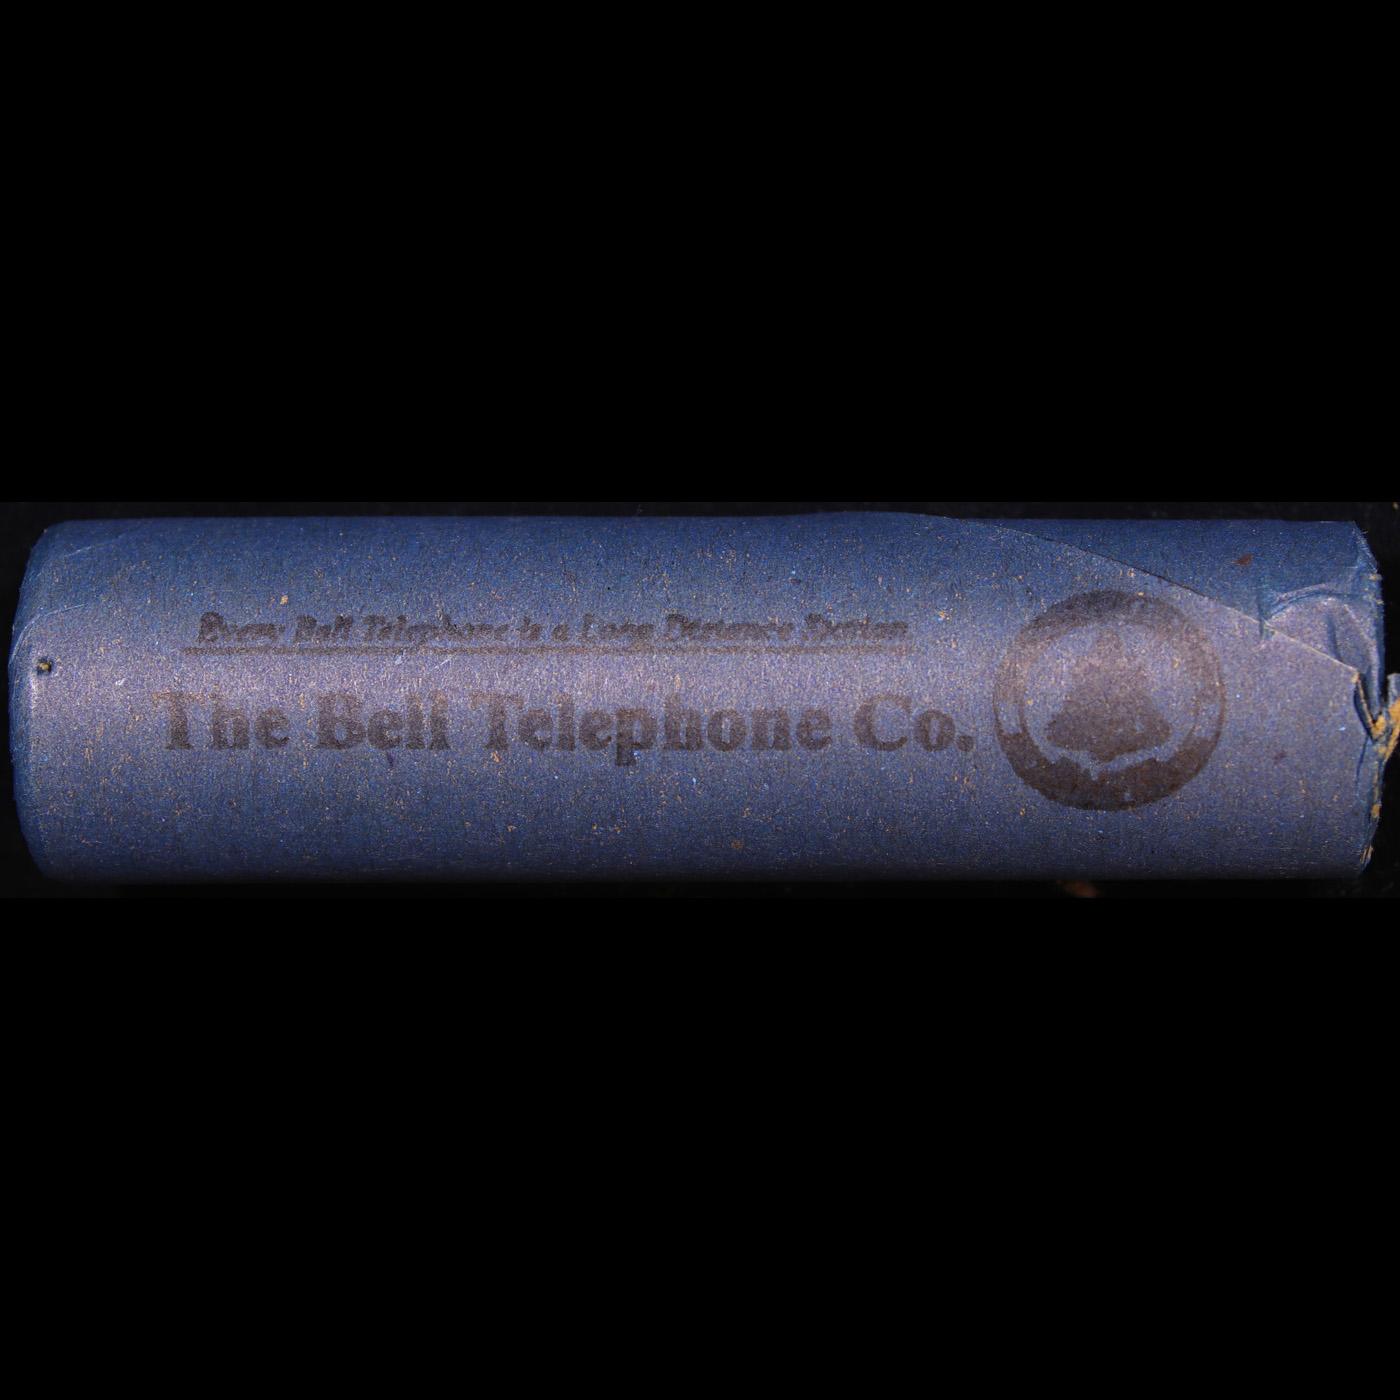 Buffalo Nickel Shotgun Roll in old Bell Telephone Bank Wrapper 1935 & d Mint Ends